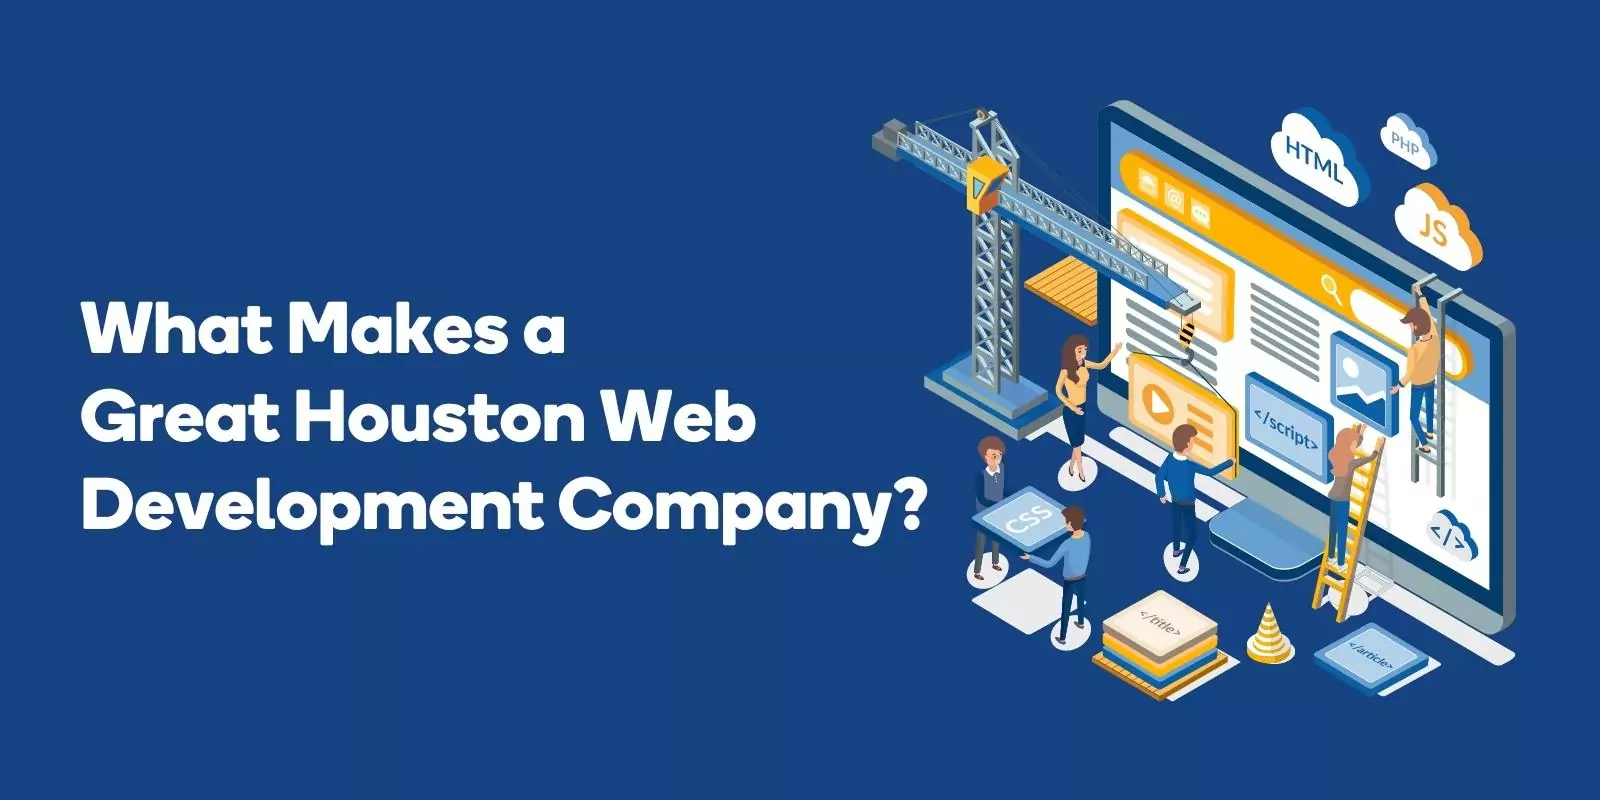 What Makes a Great Houston Web Development Company